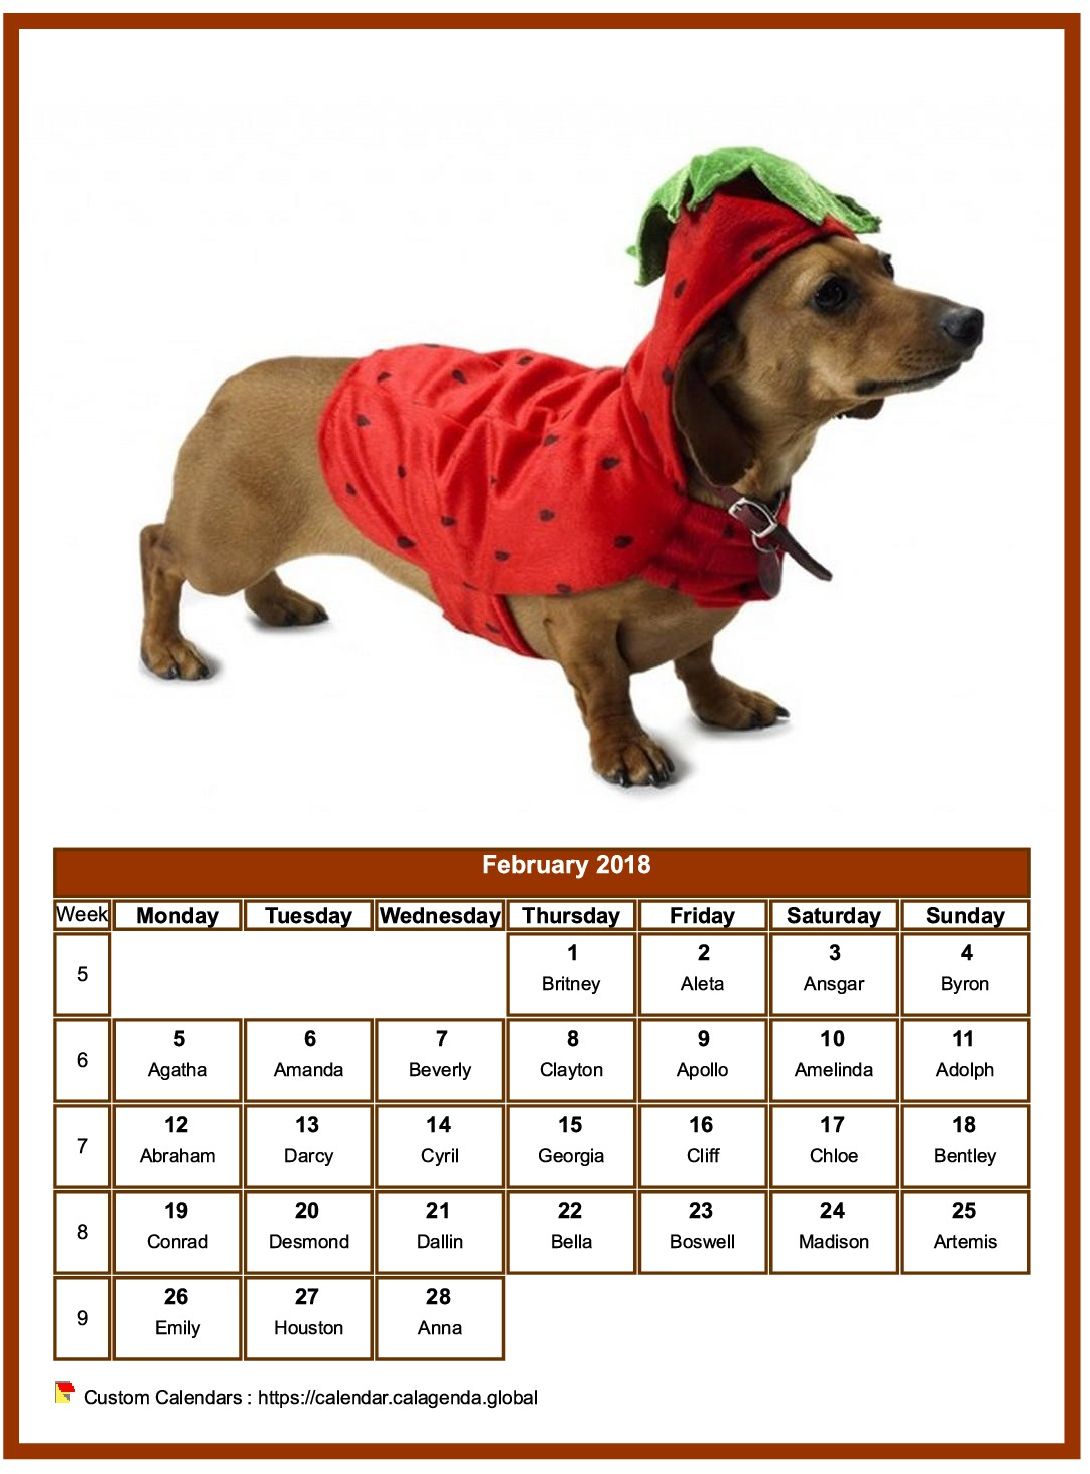 Calendar February 2018 dogs